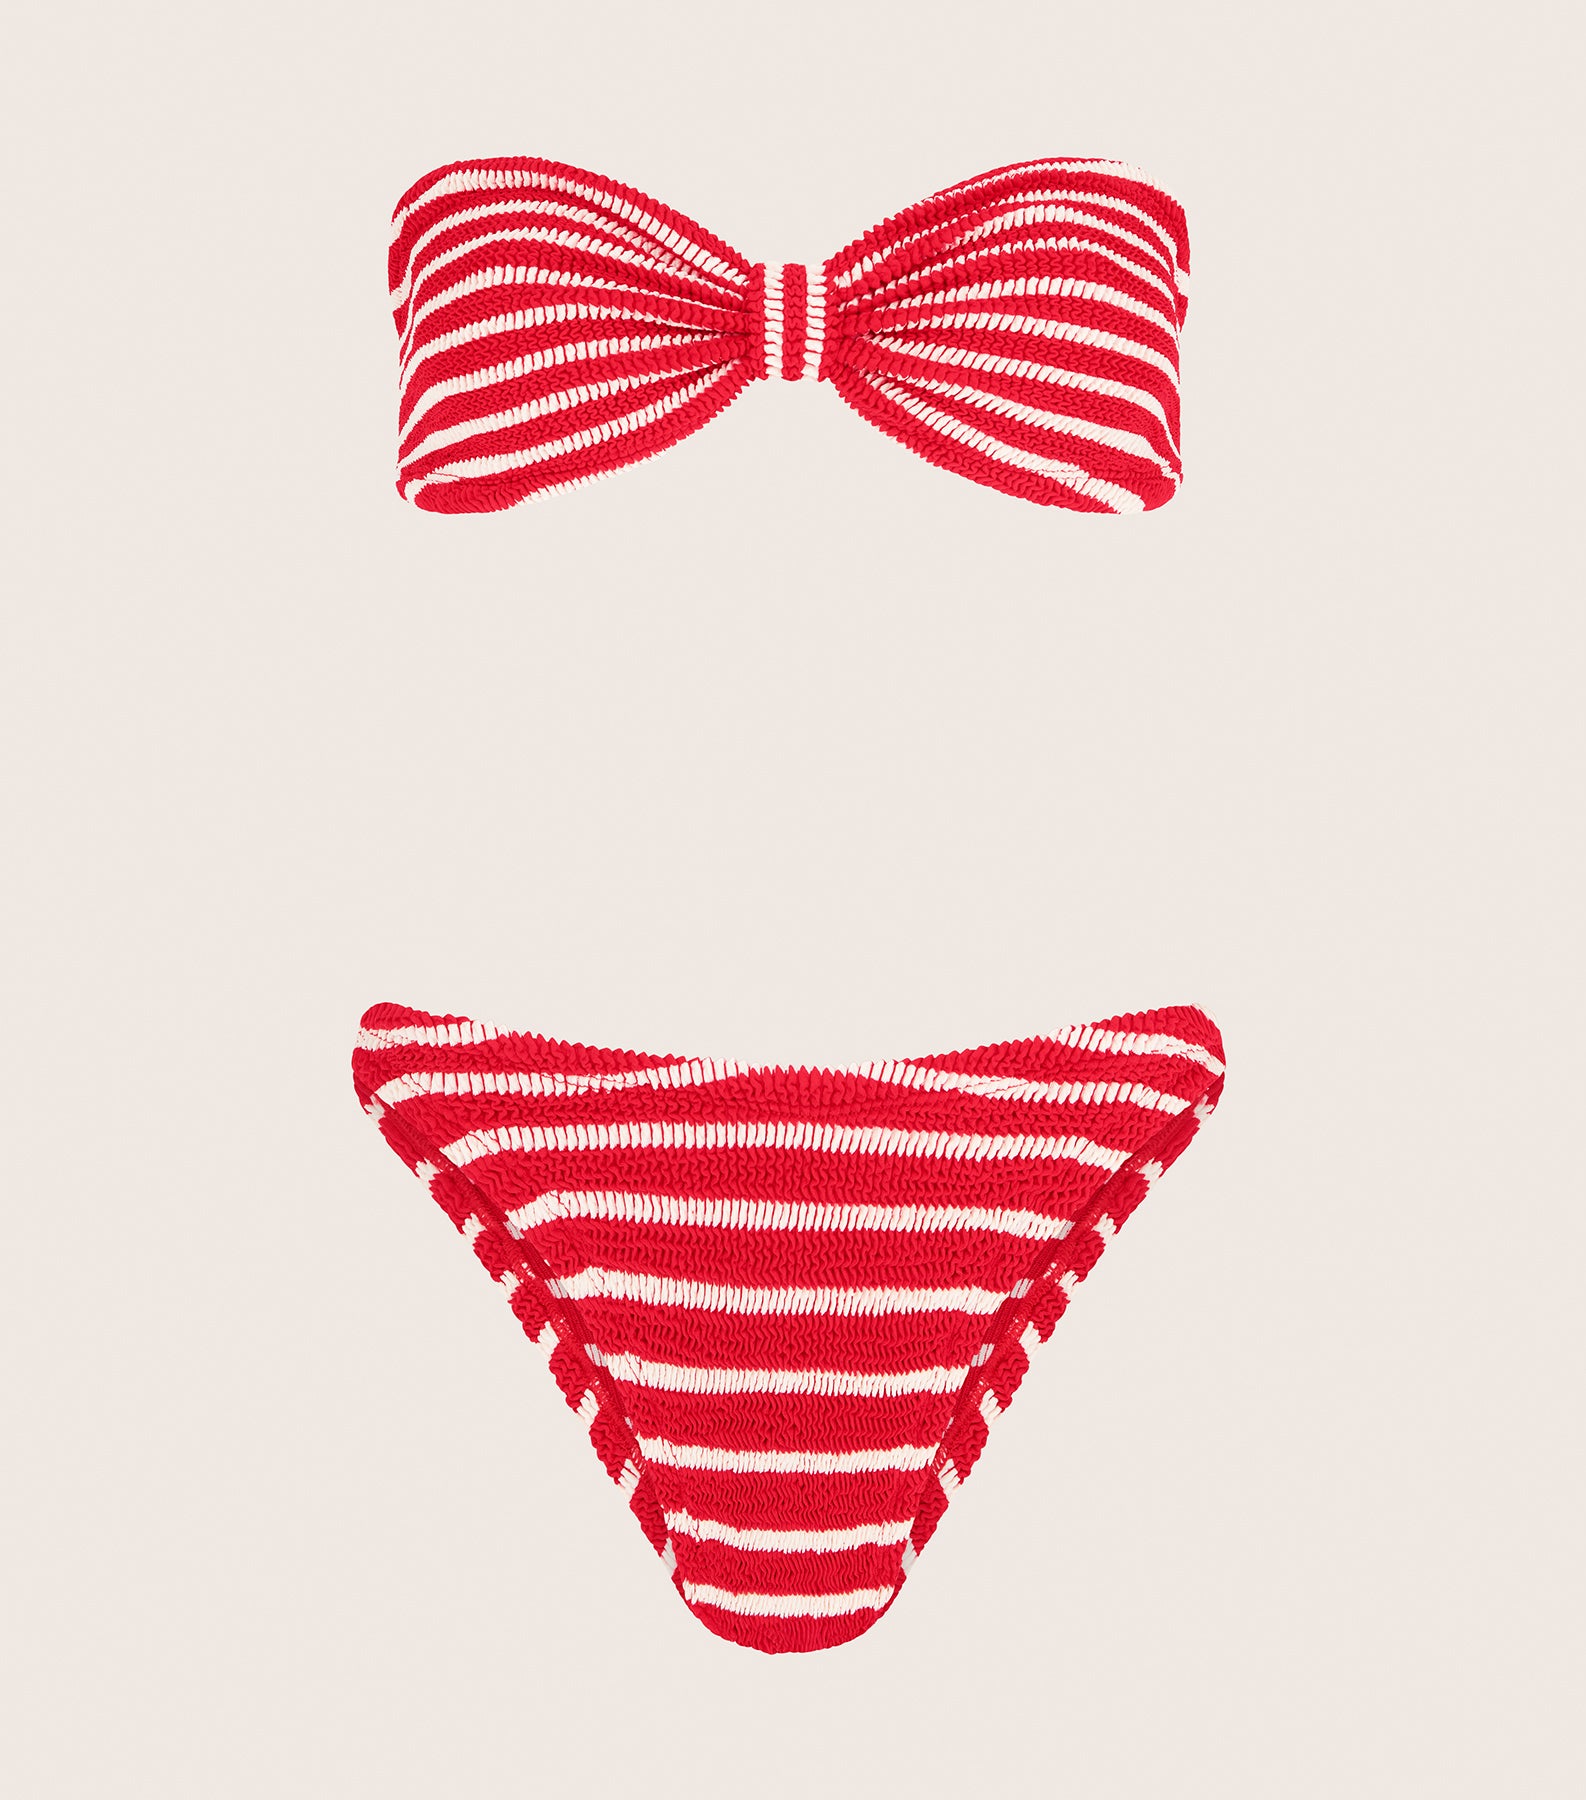 Jean Stripe Bikini - Red/White